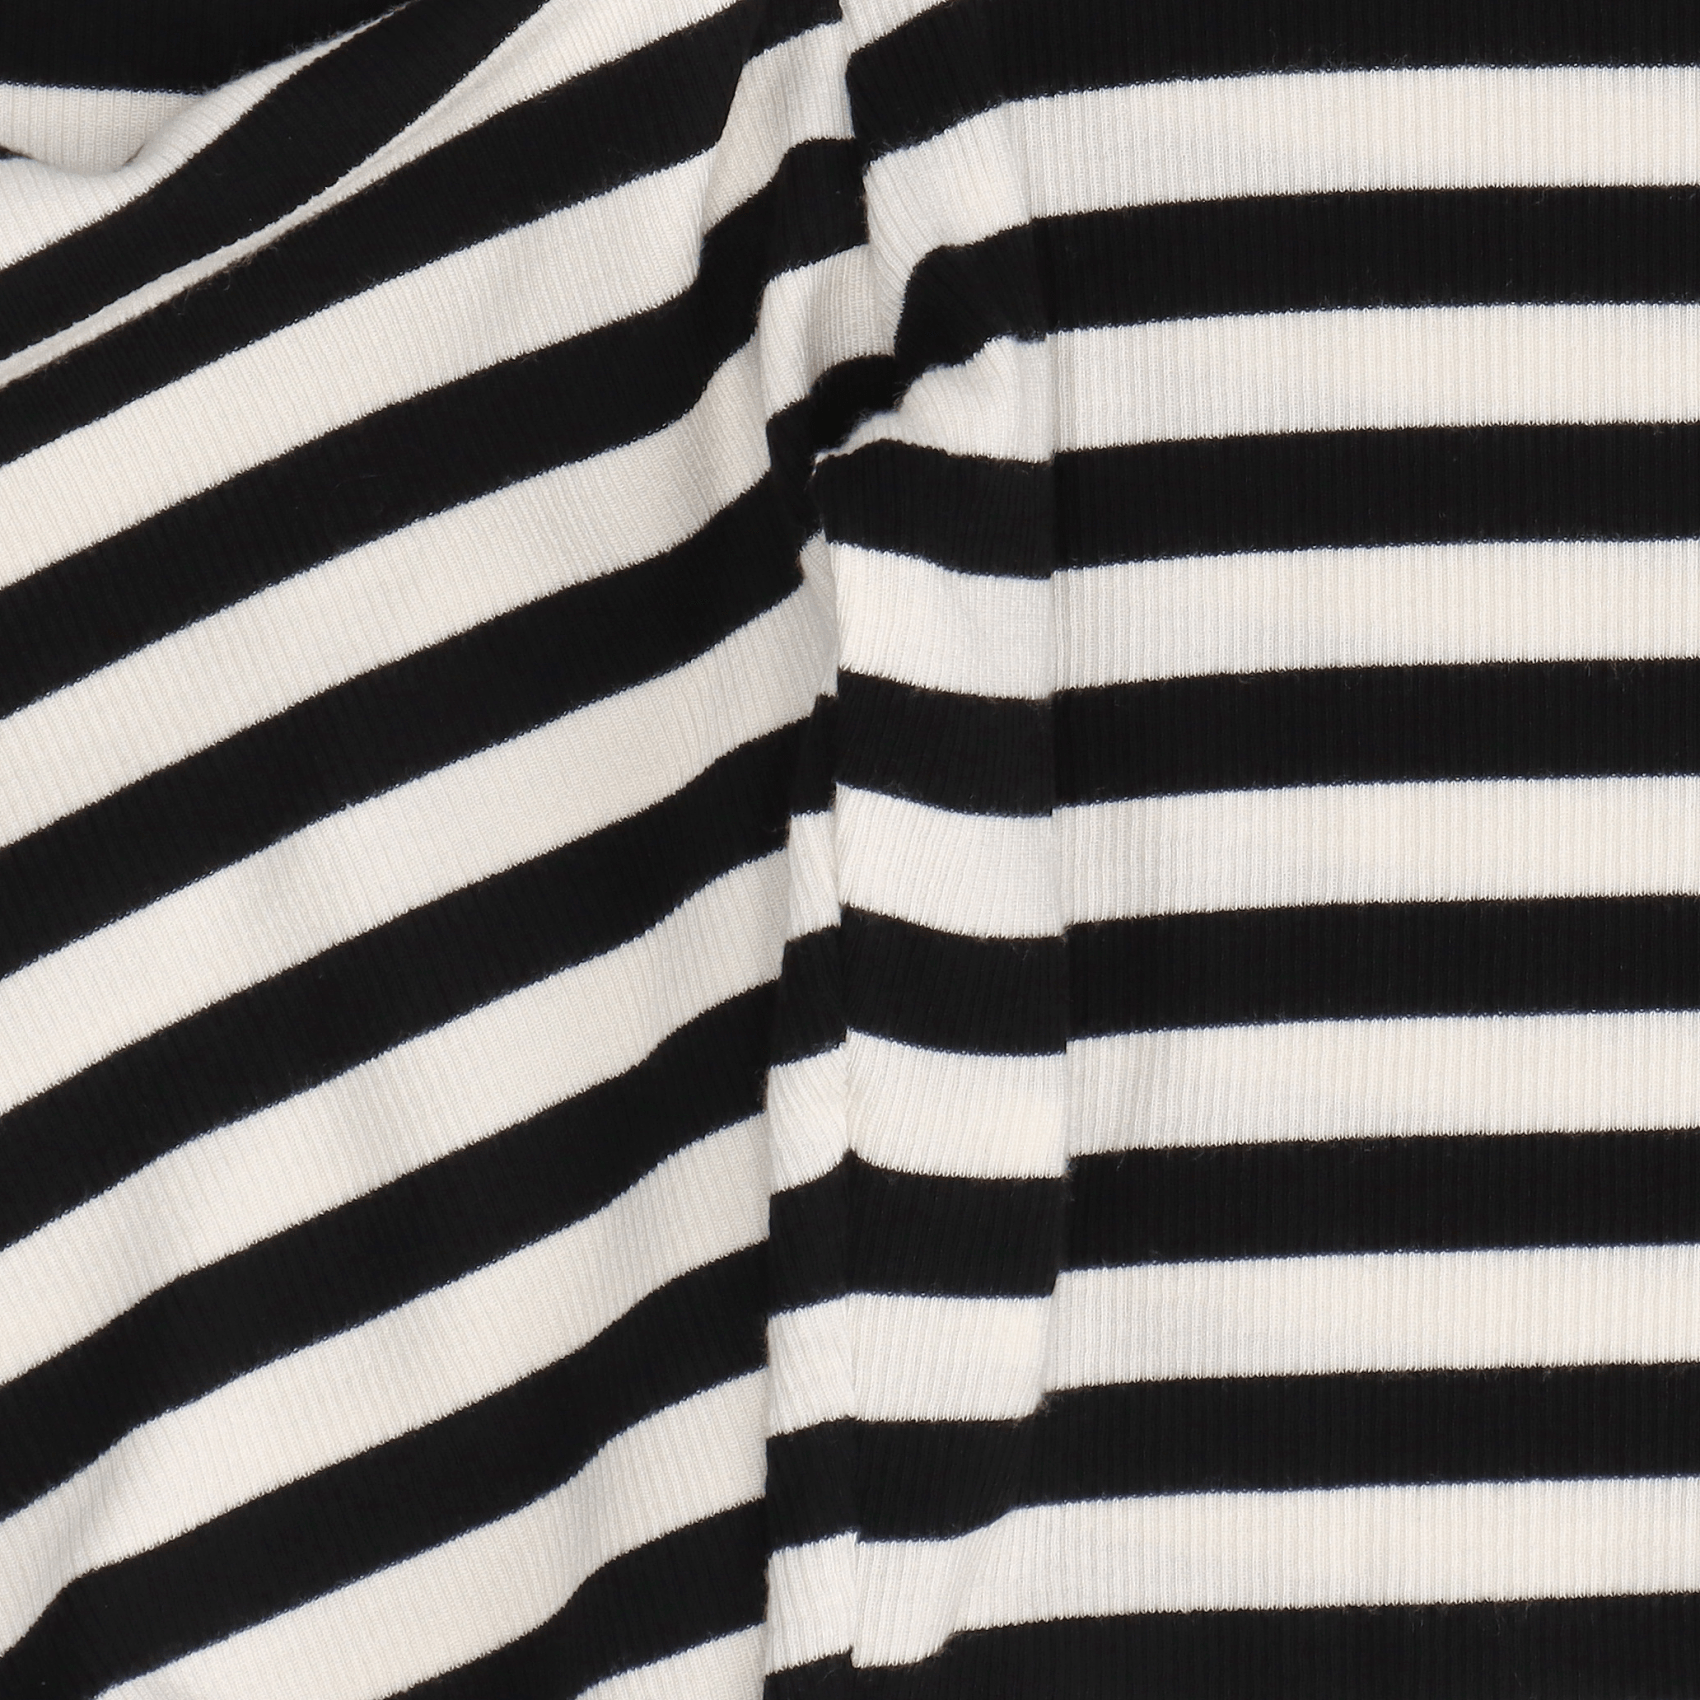 Maglia Time - Black/White Stripes.